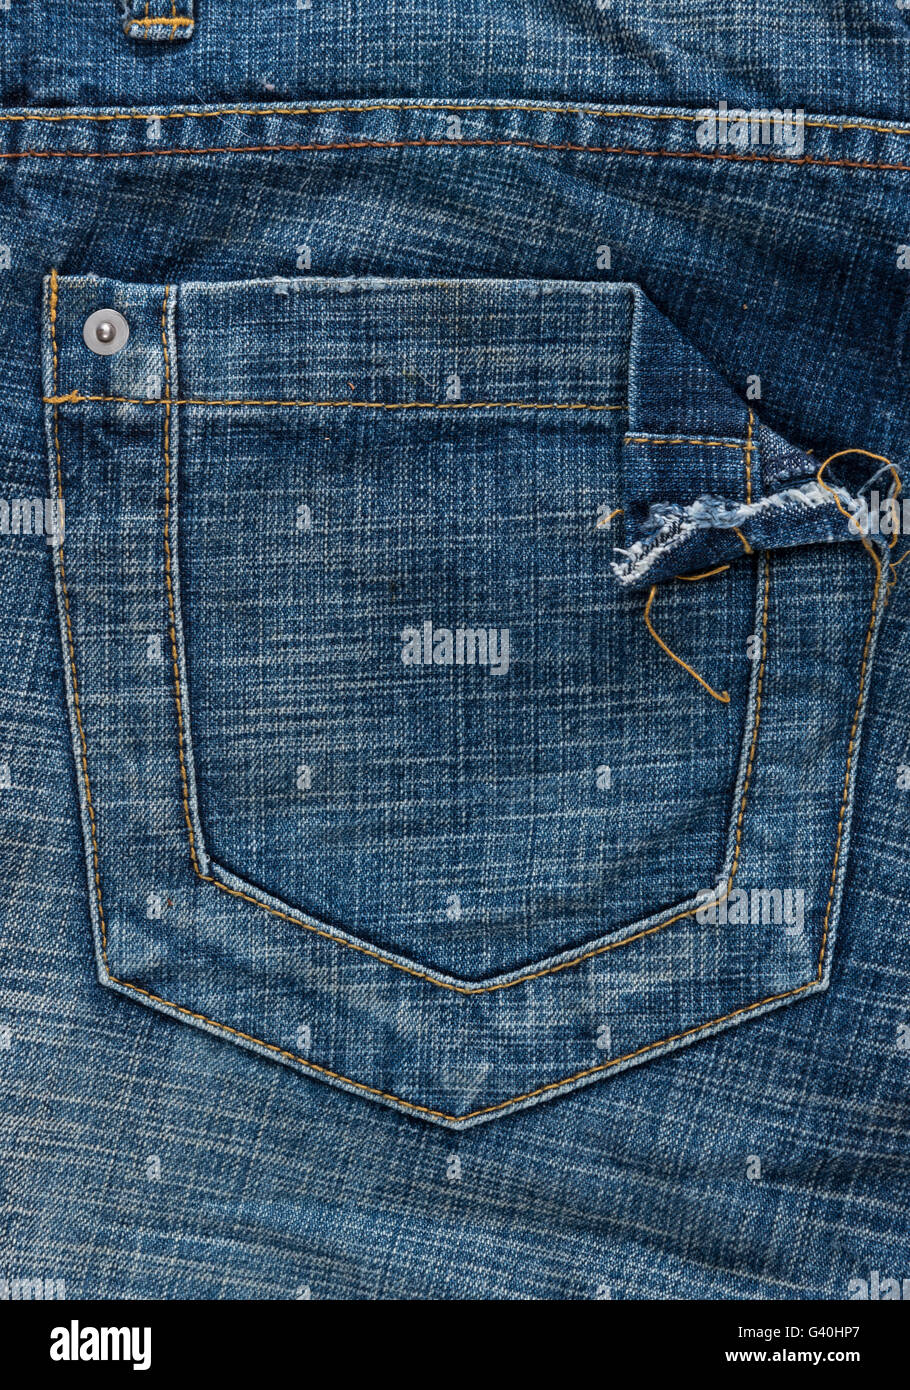 Back pocket Jeans texture Stock Photo